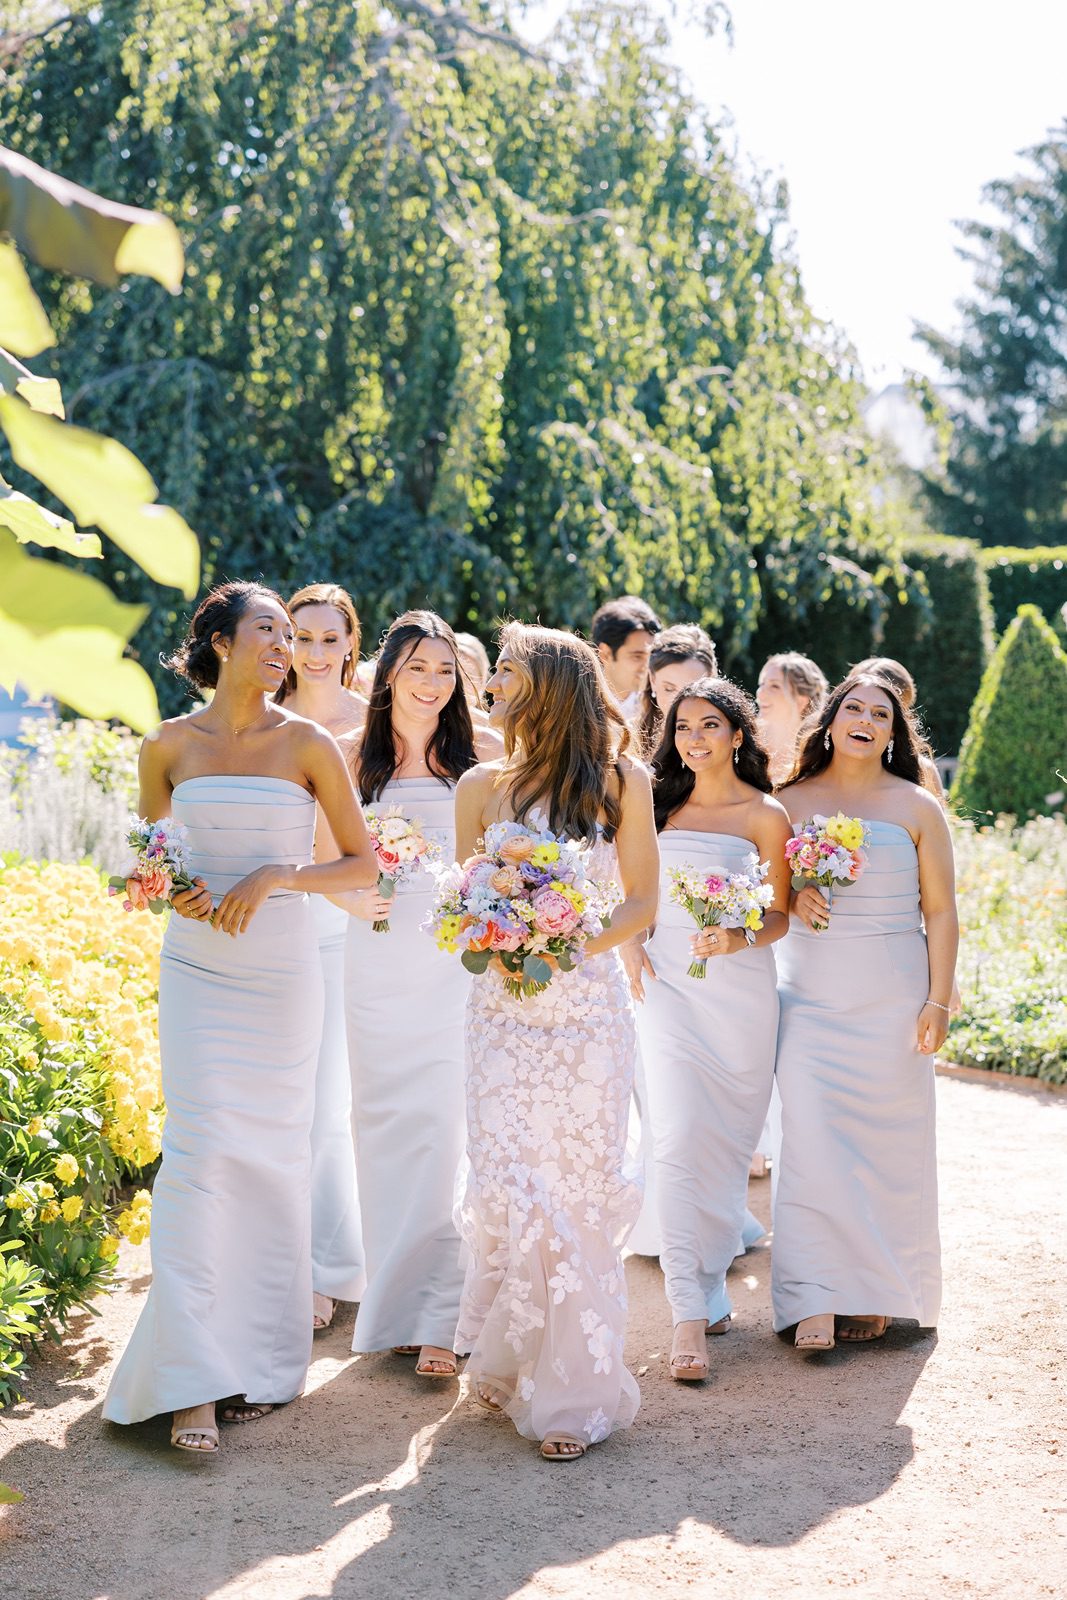 Bridesmaids at the Chicago Botanic Garden wedding